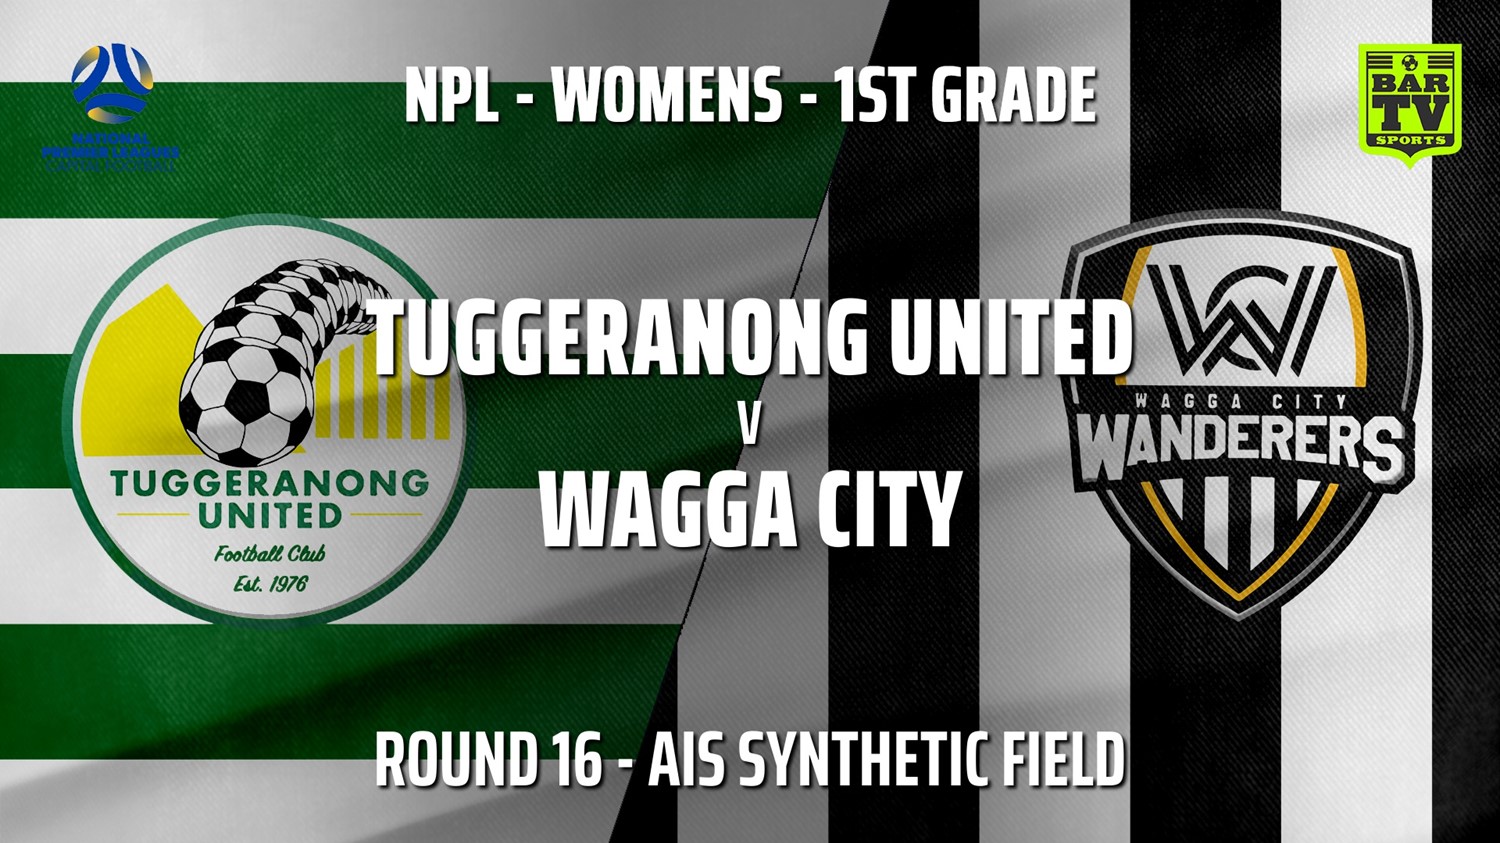 210801-Capital Womens Round 16 - Tuggeranong United FC (women) v Wagga City Wanderers FC (women) Minigame Slate Image